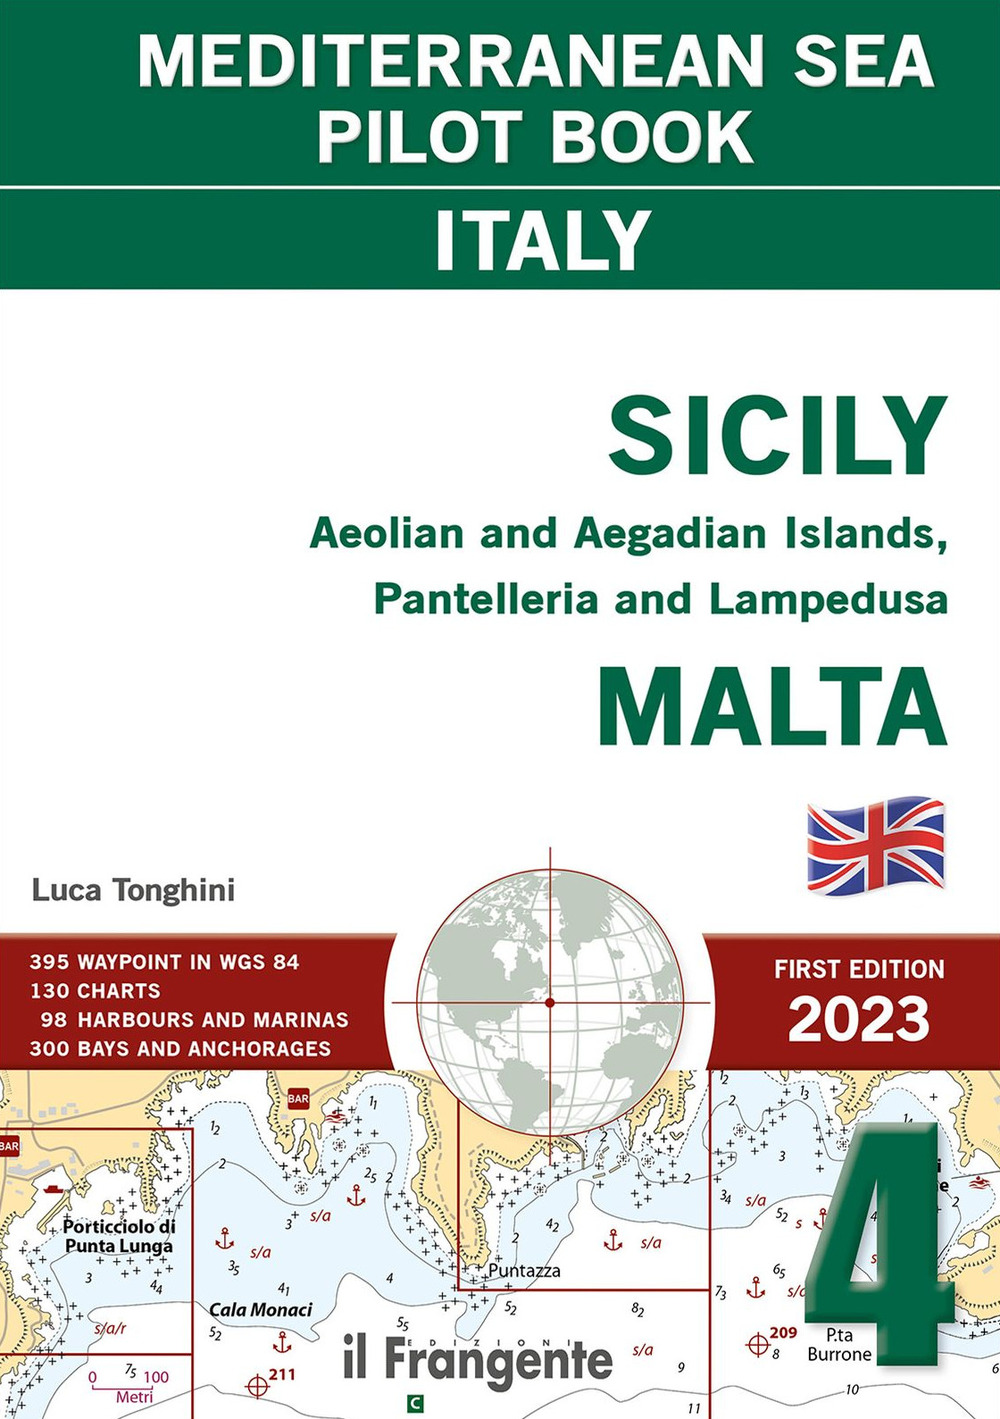 Sicily, Aeolian and Aegadian Islands, Pantelleria and Lampedusa, Malta. Mediterranean sea pilot book Italy. Vol. 4